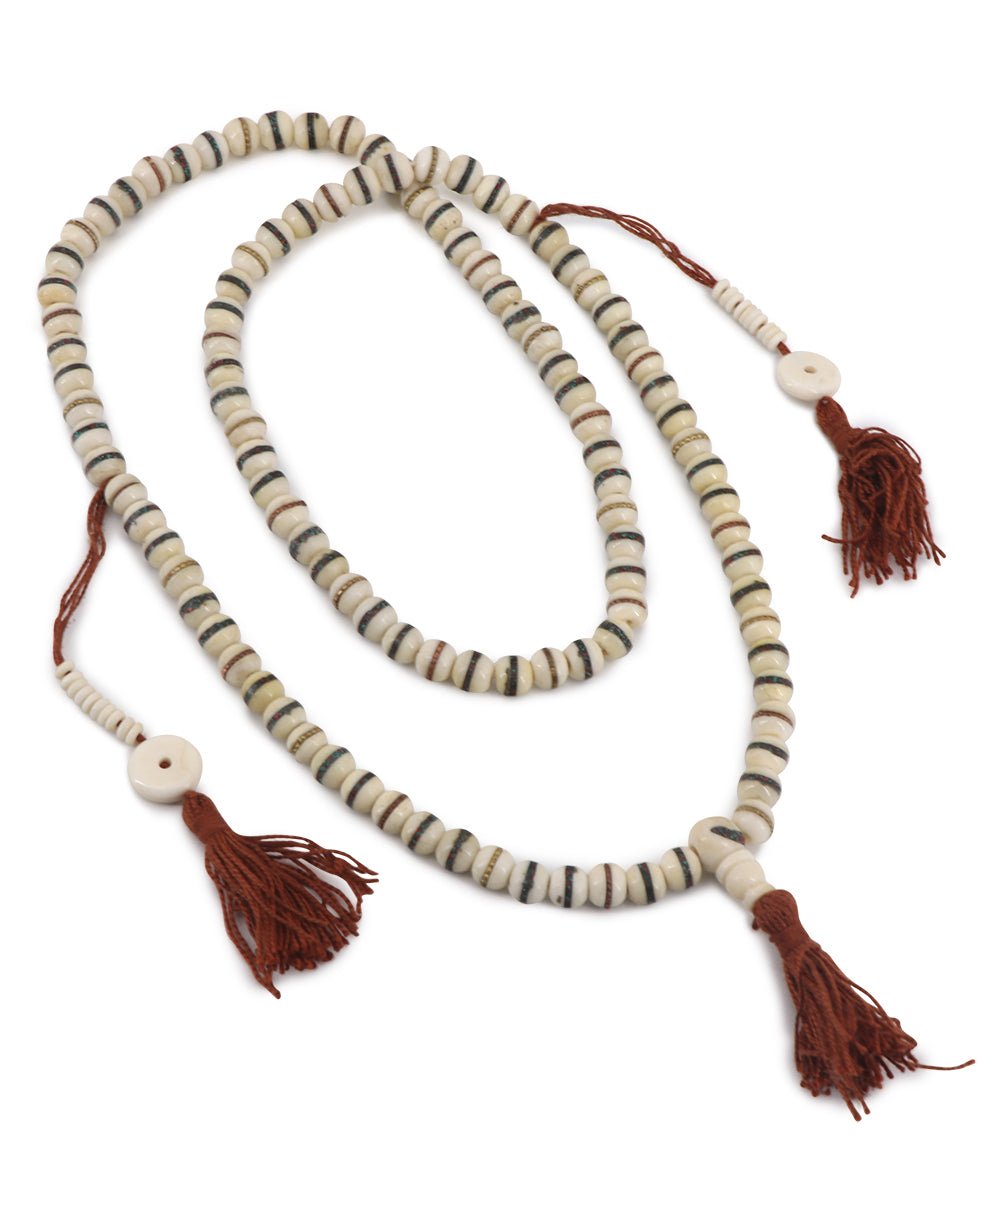 108 Beads Meditation Mala with Counters, Bone Inlay - Prayer Beads